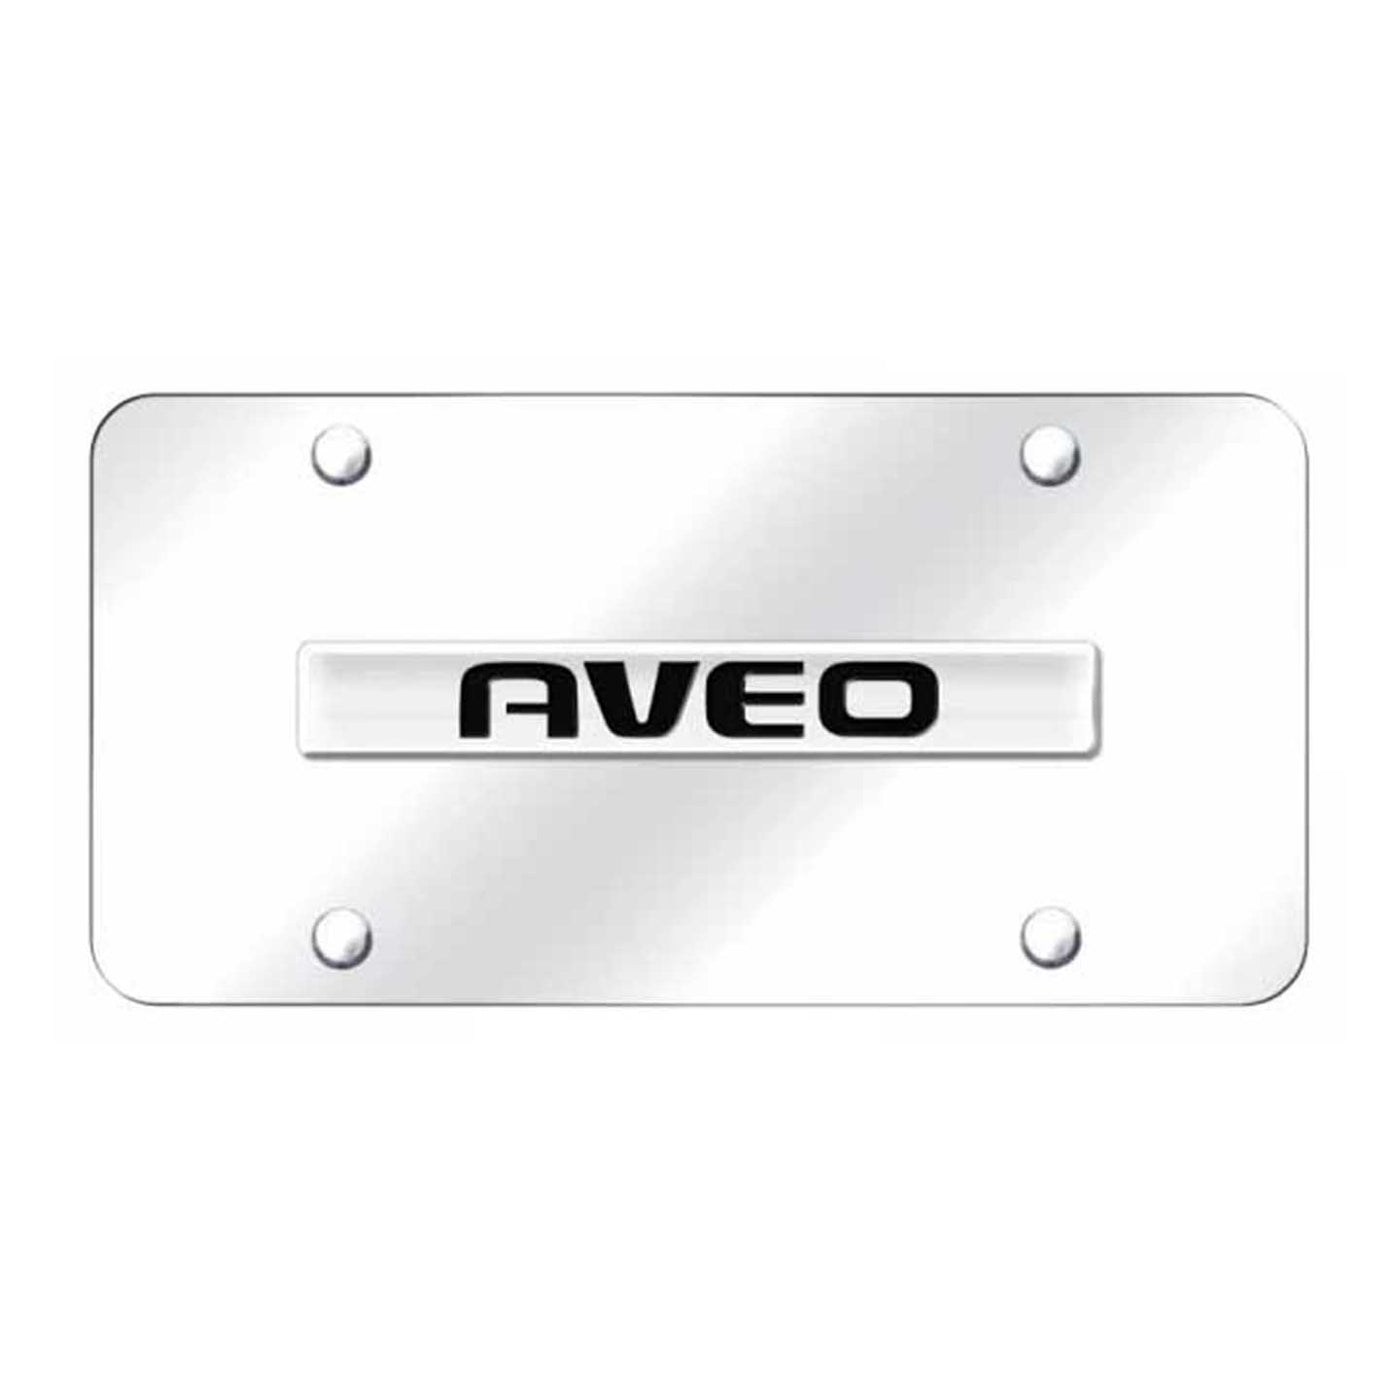 Aveo Name License Plate - Chrome on Mirrored